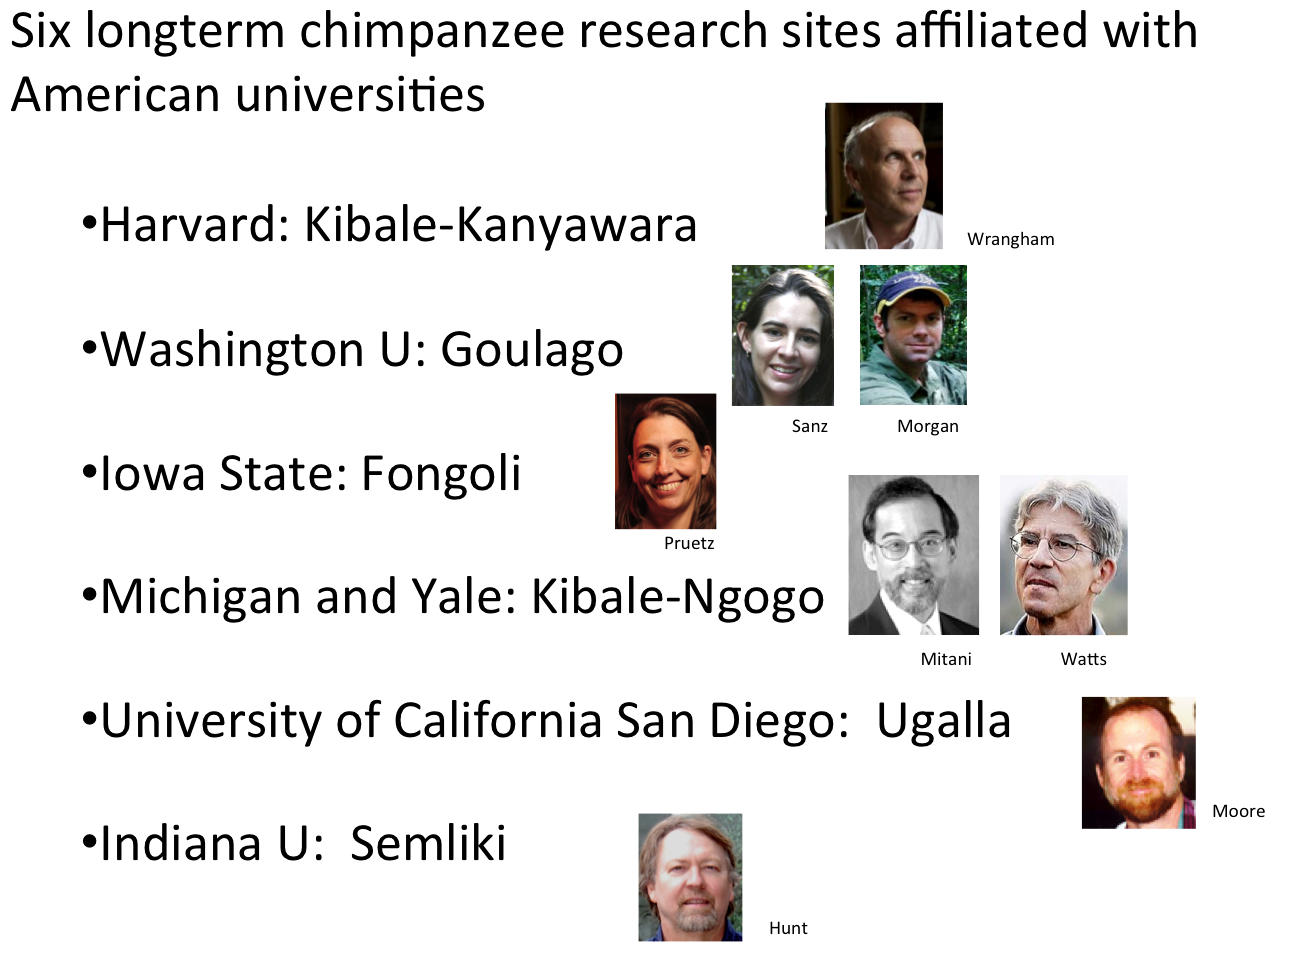 Quick summary of American university chimpanzee study sites